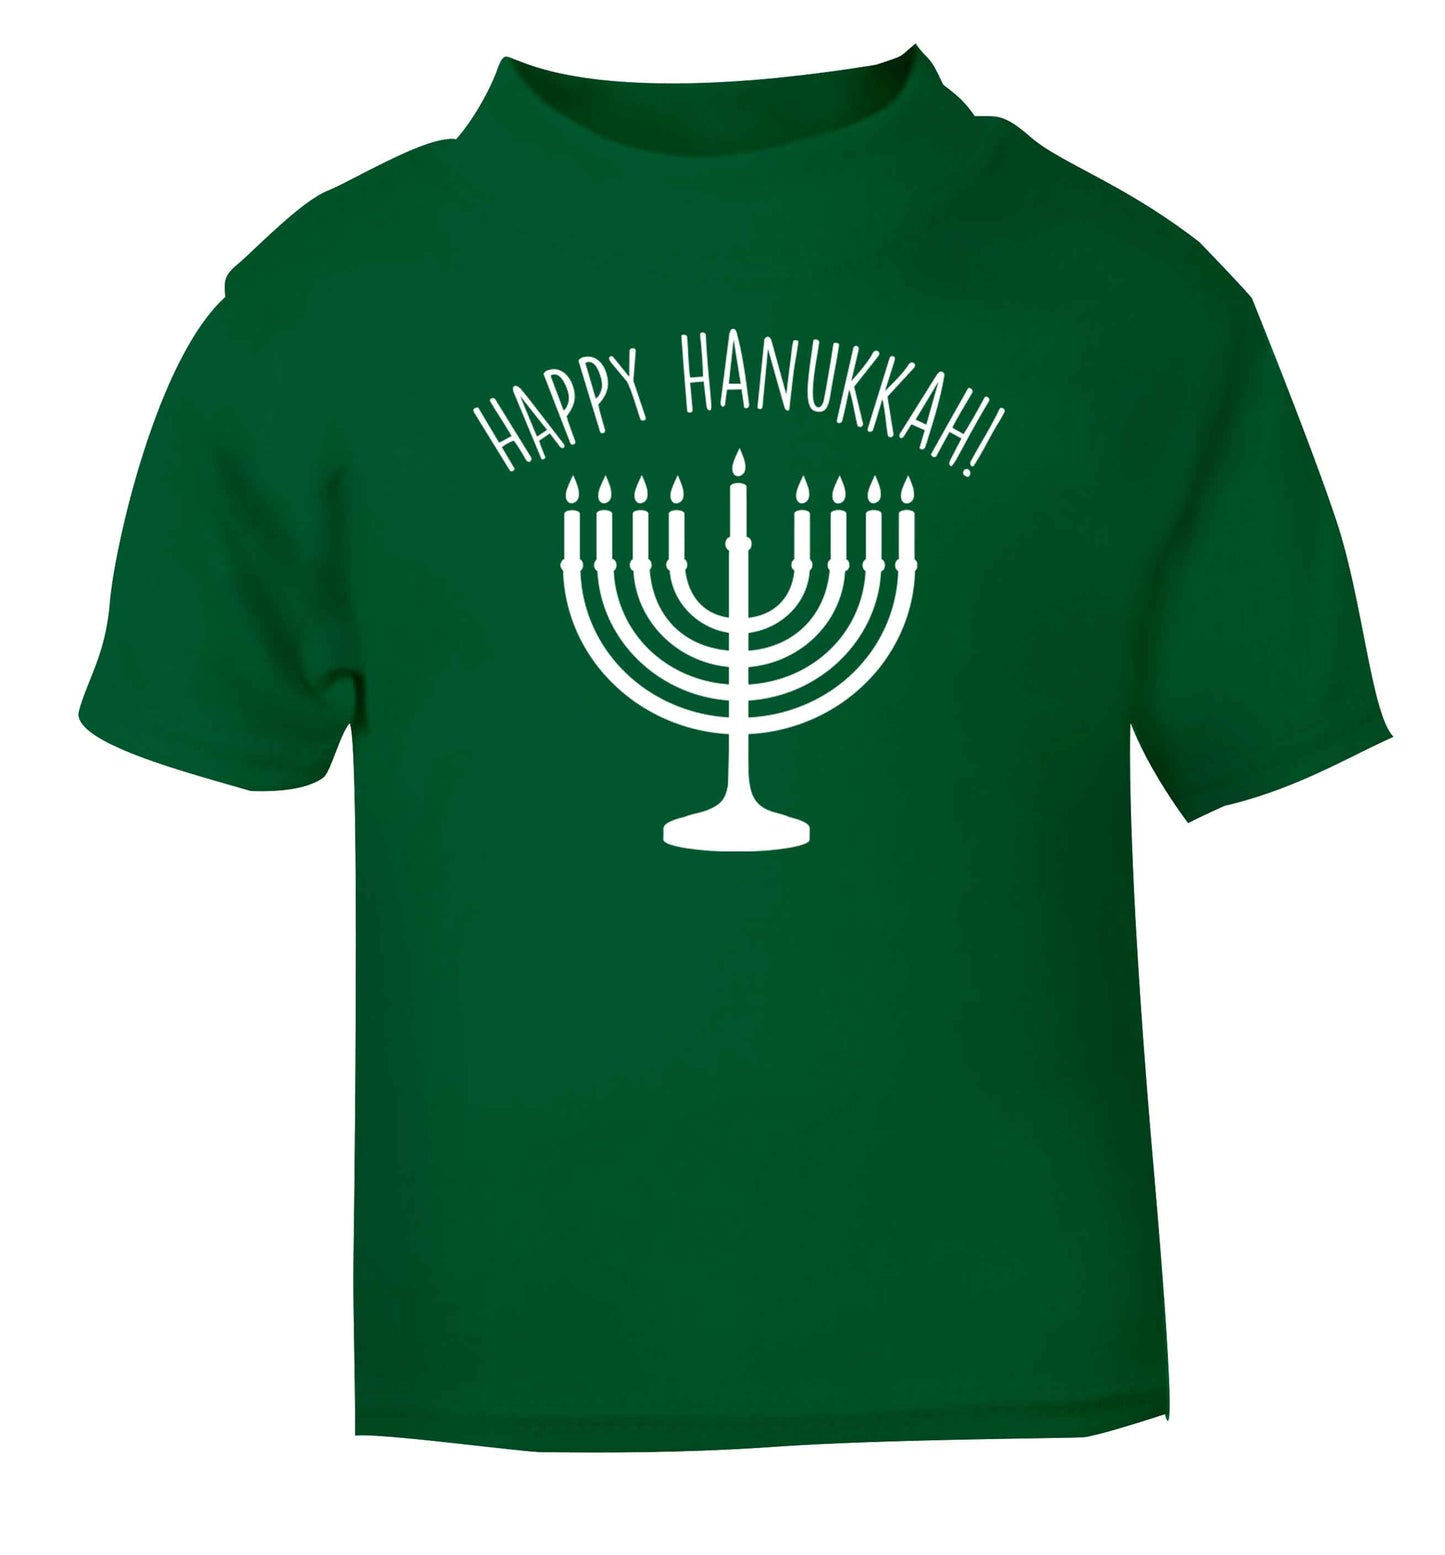 Happy hanukkah green baby toddler Tshirt 2 Years